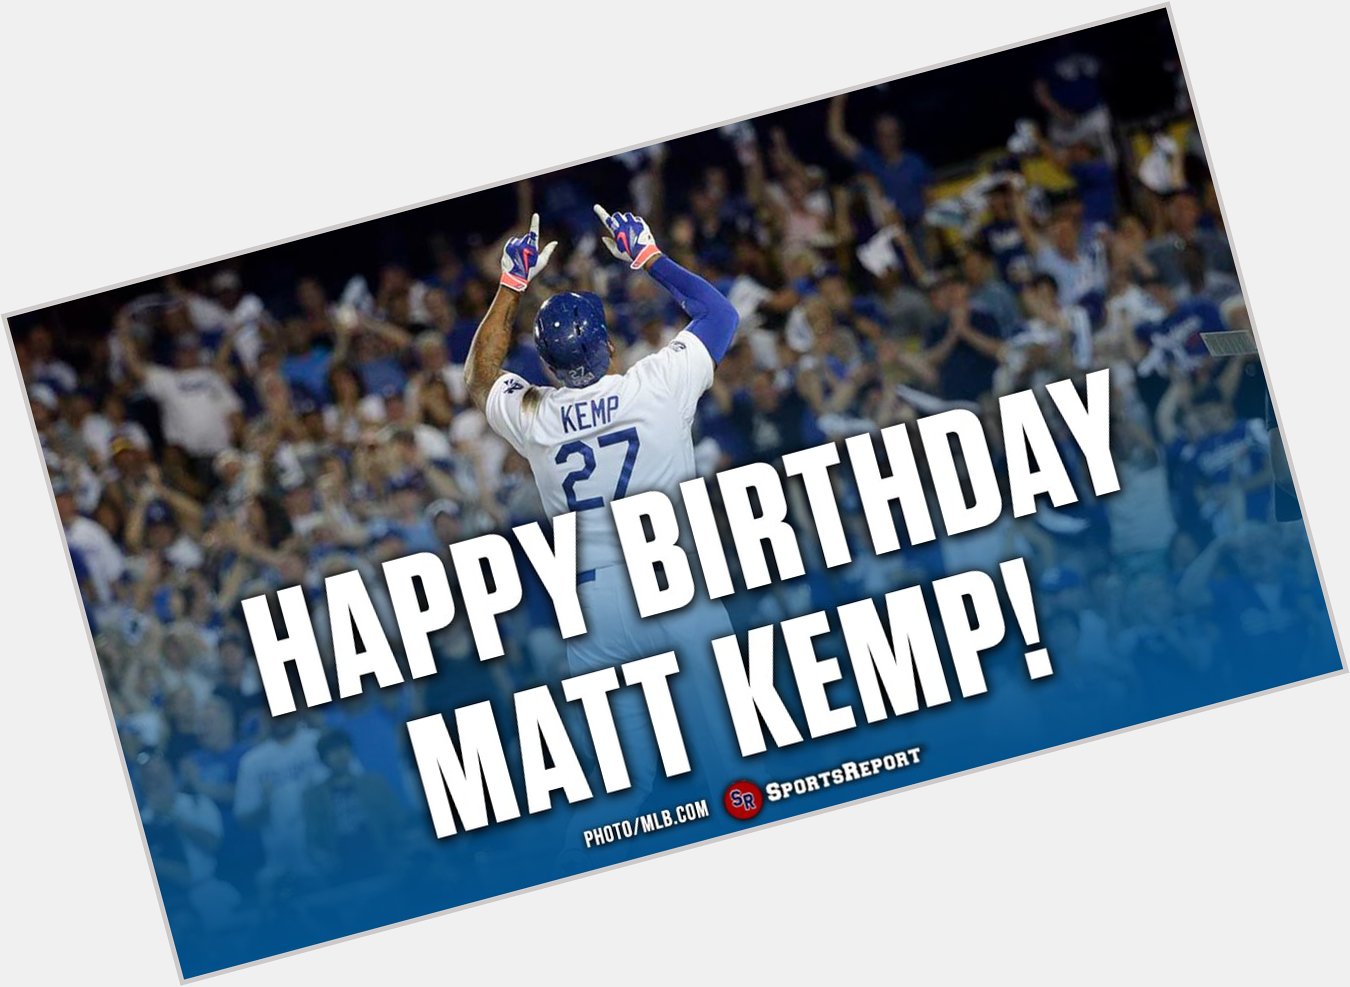  Fans, let\s wish Matt Kemp a Happy Birthday! GO DODGERS!! 